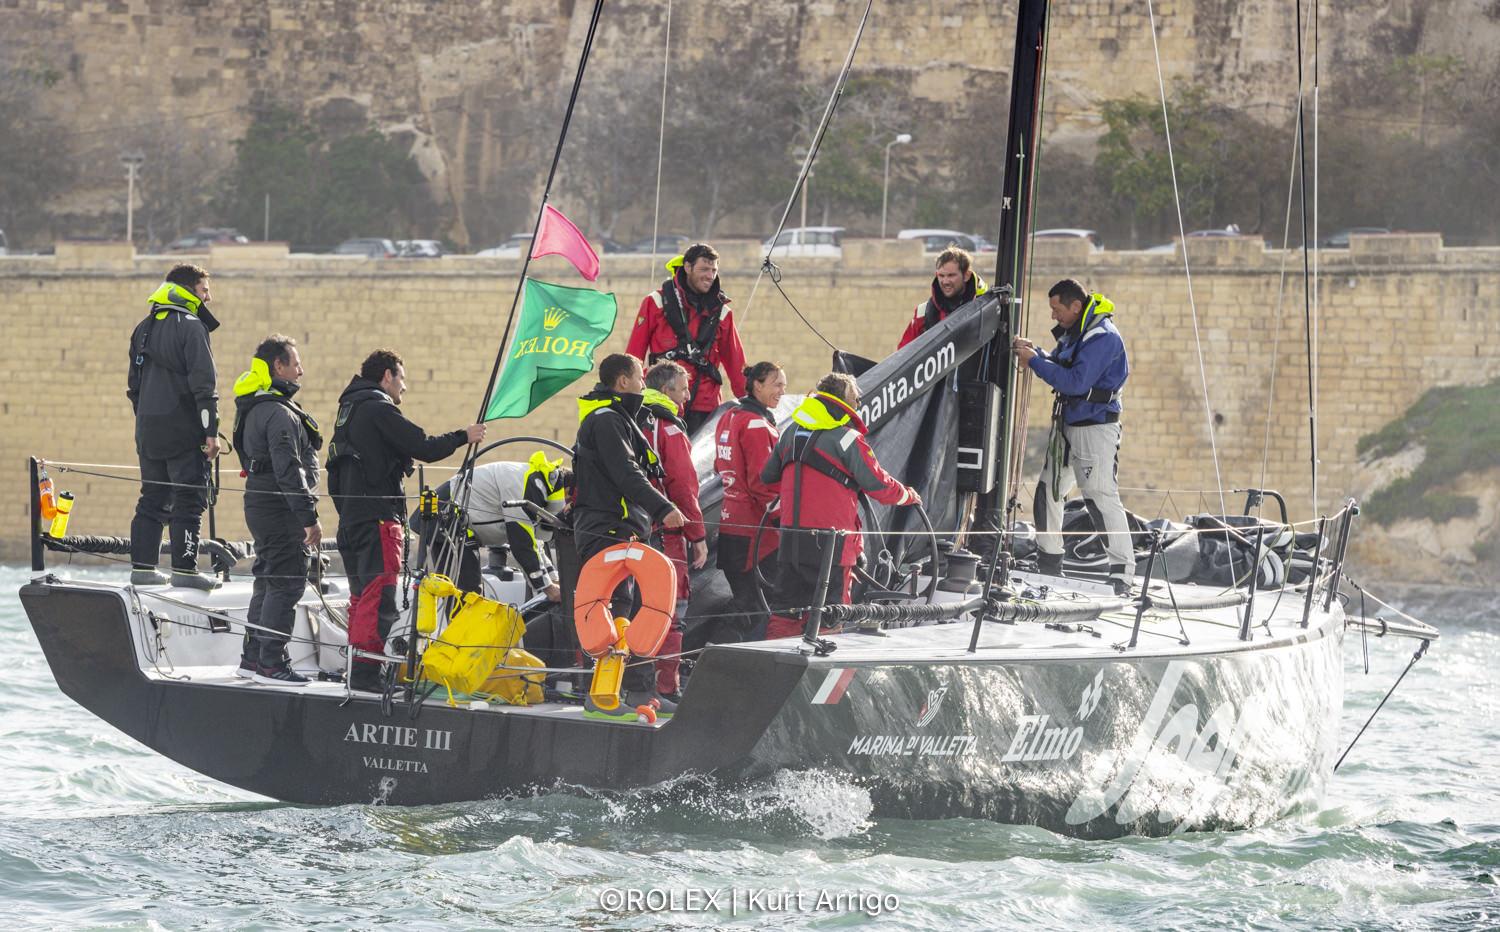 42nd Rolex Middle Sea Race, the maltese yacht Artie III